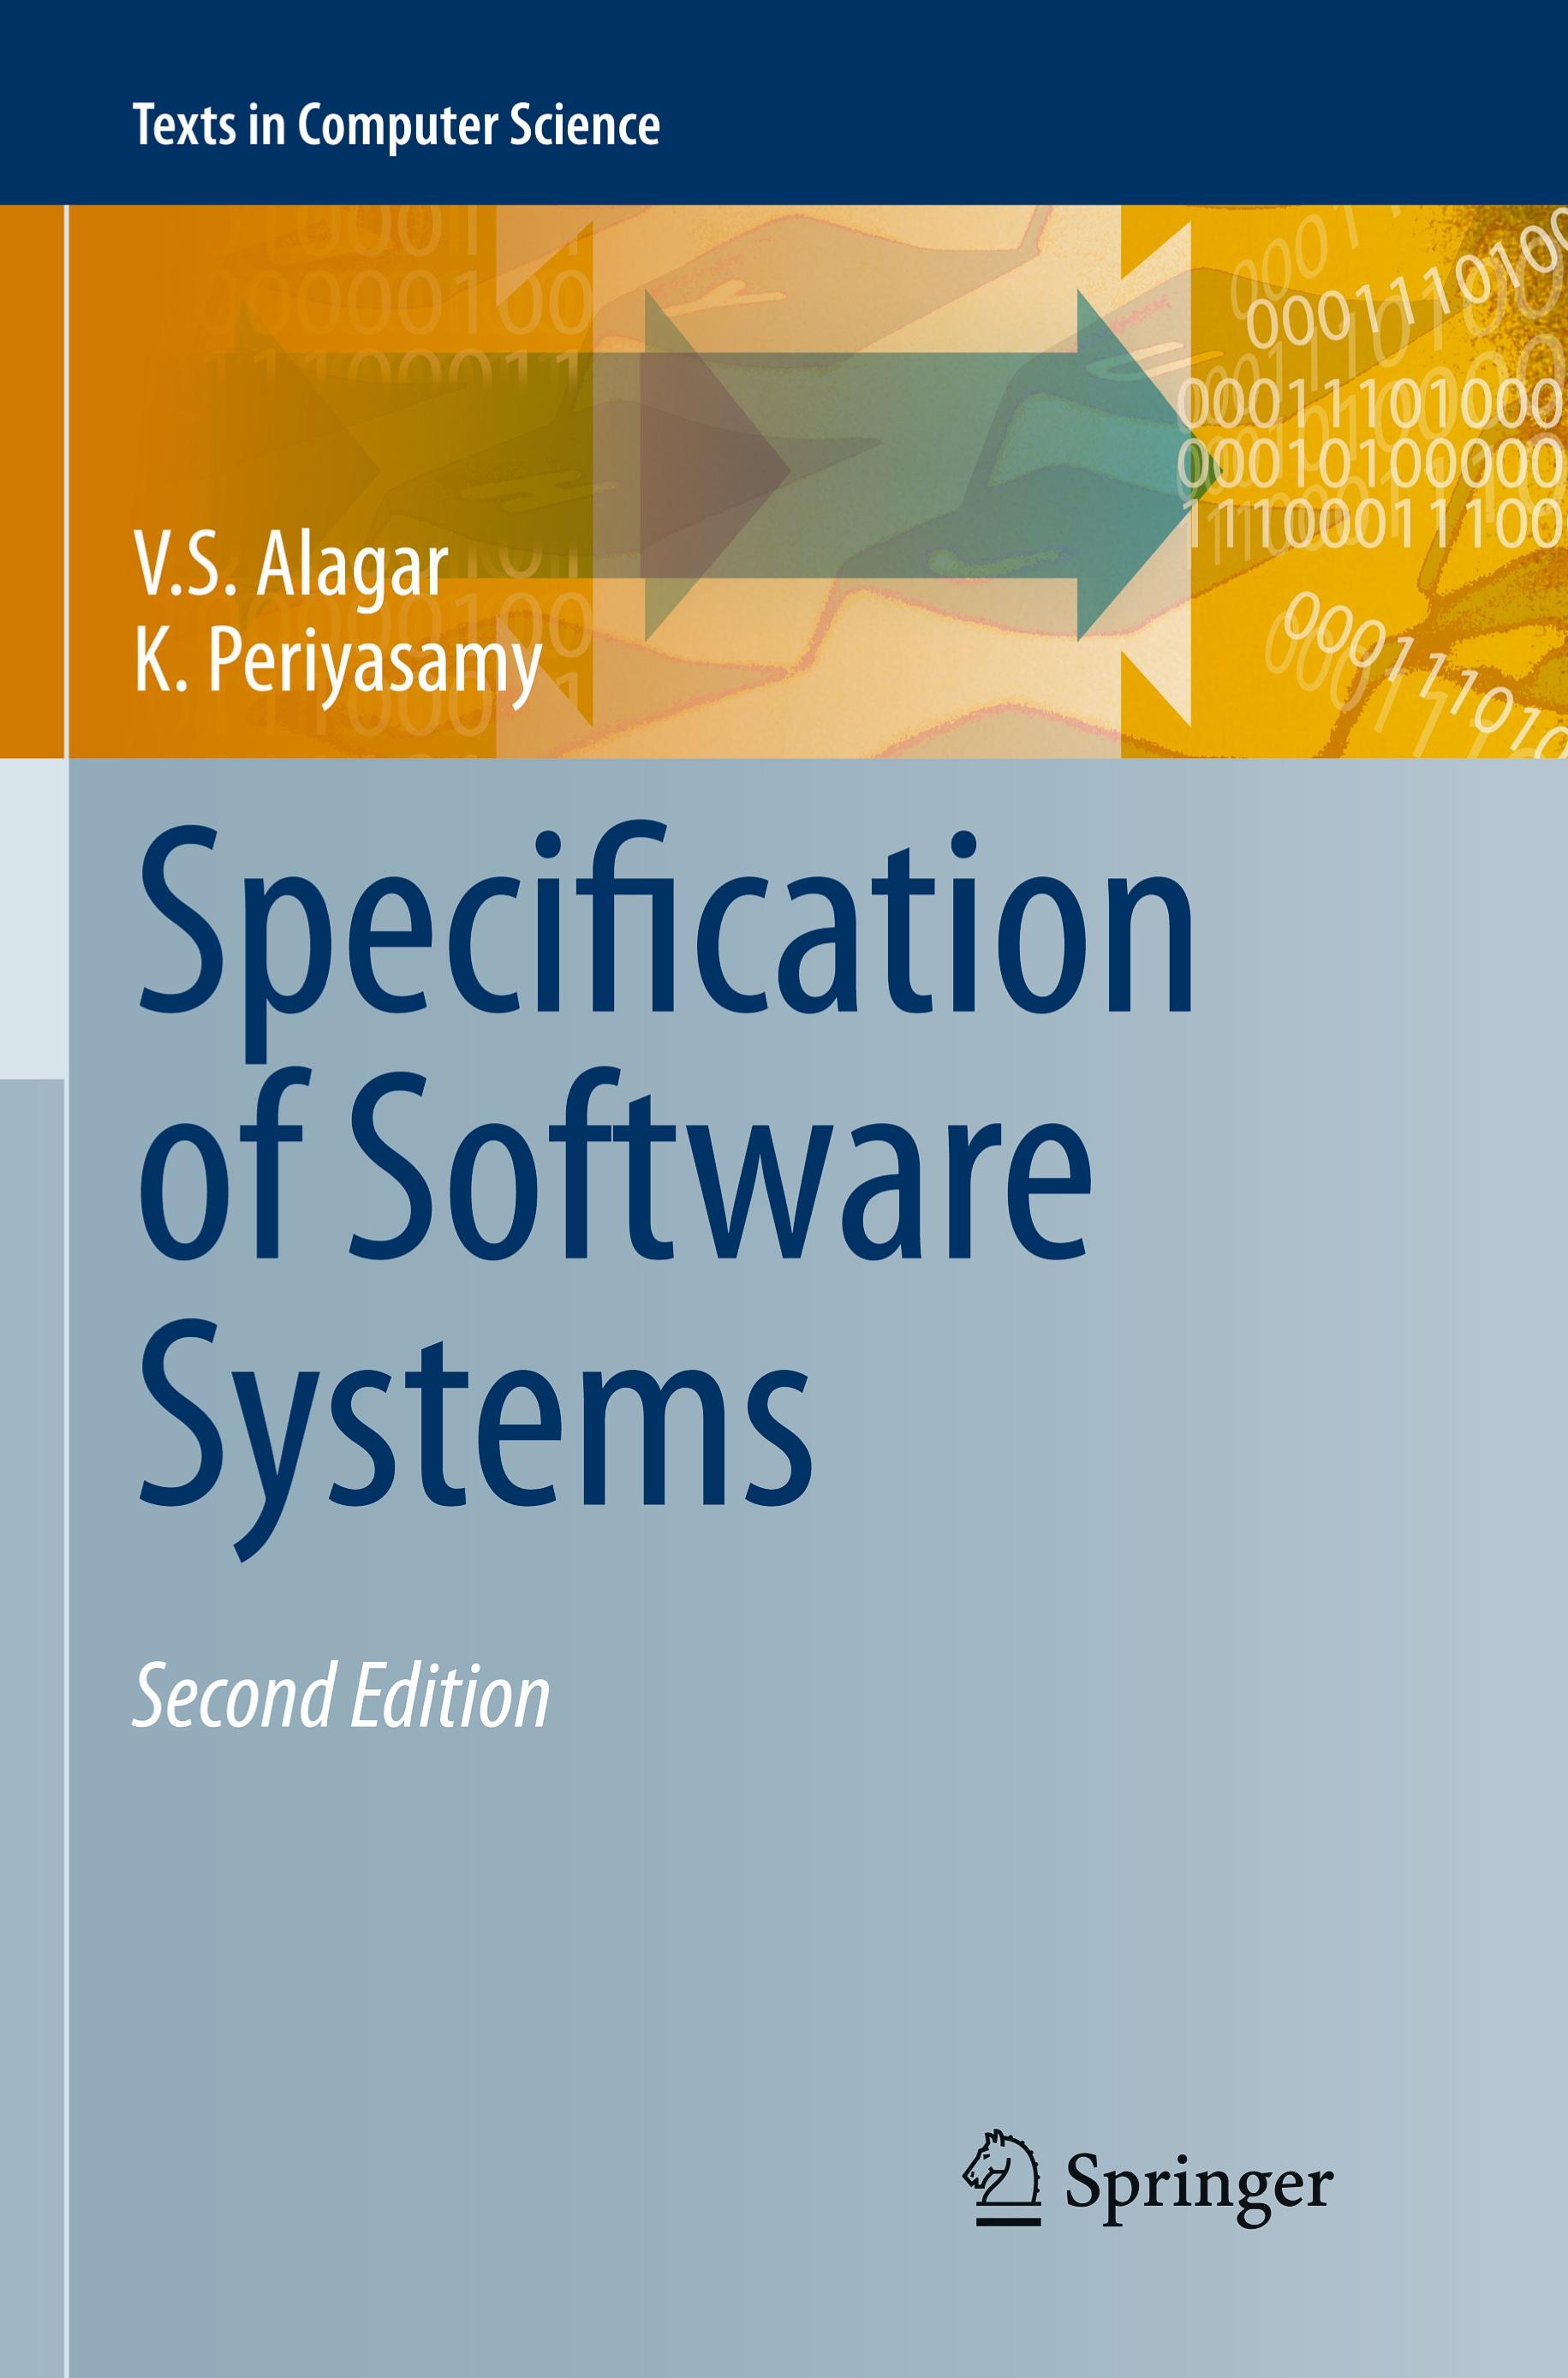 Specification of Software Systems - V.S. Alagar|K. Periyasamy